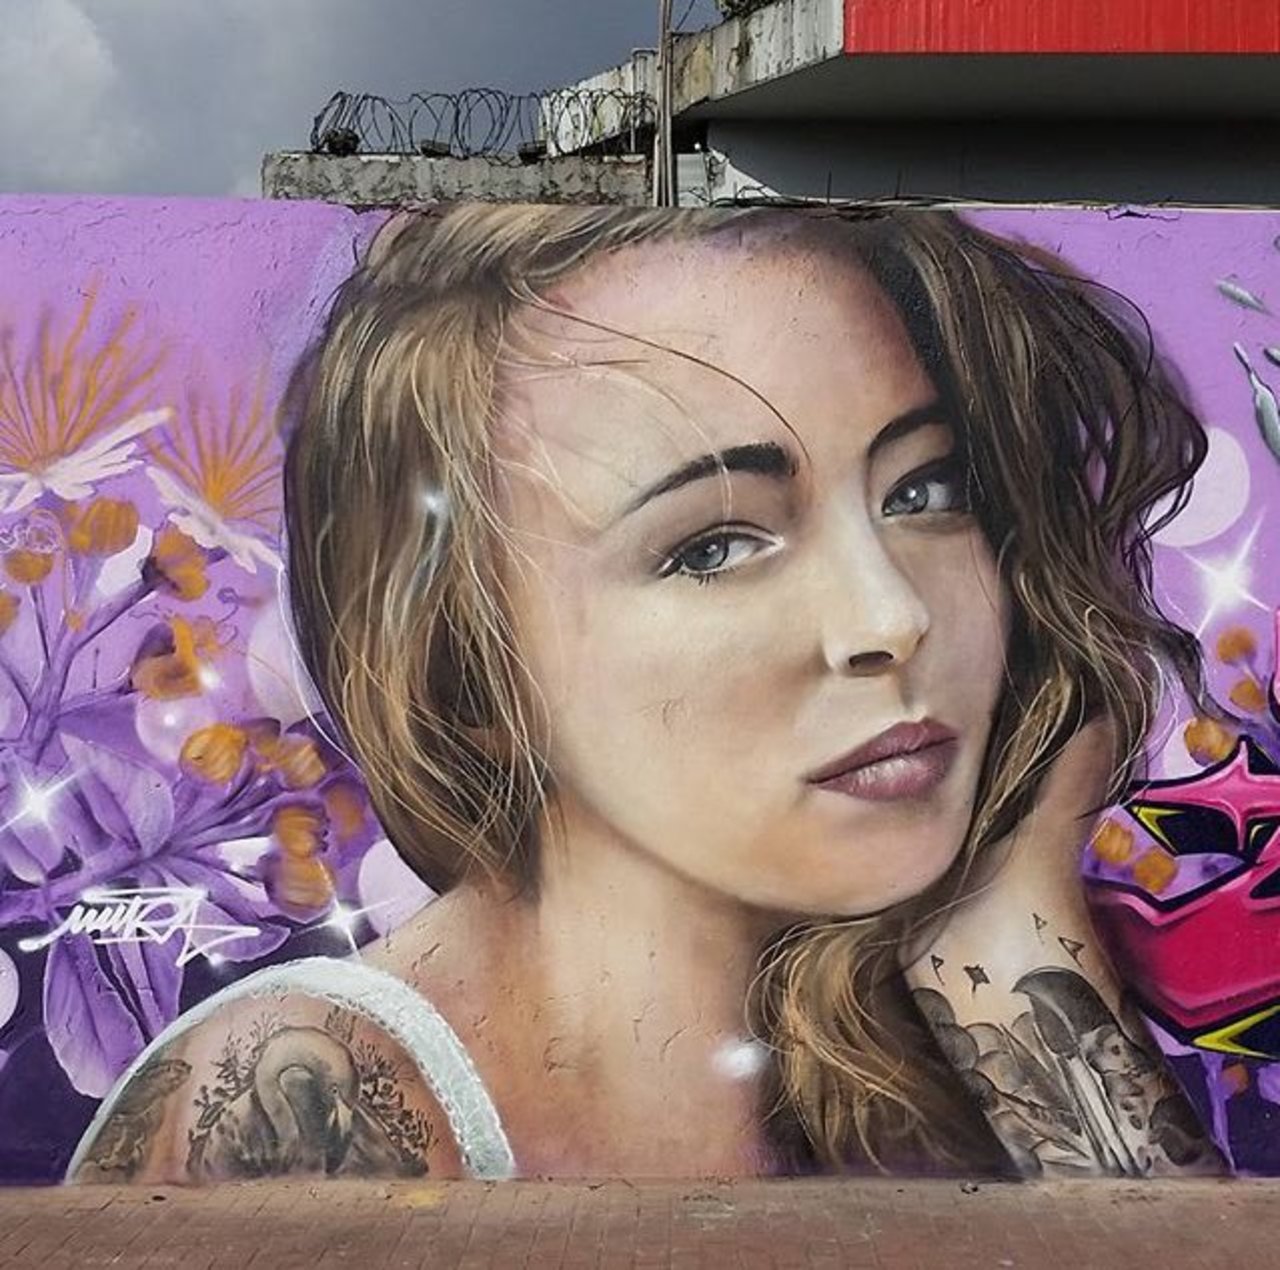 Cool! New Street Art by Mantarea 

#art #graffiti #mural #streetart https://t.co/cyWKSBYqth MT @GoogleStreetArt